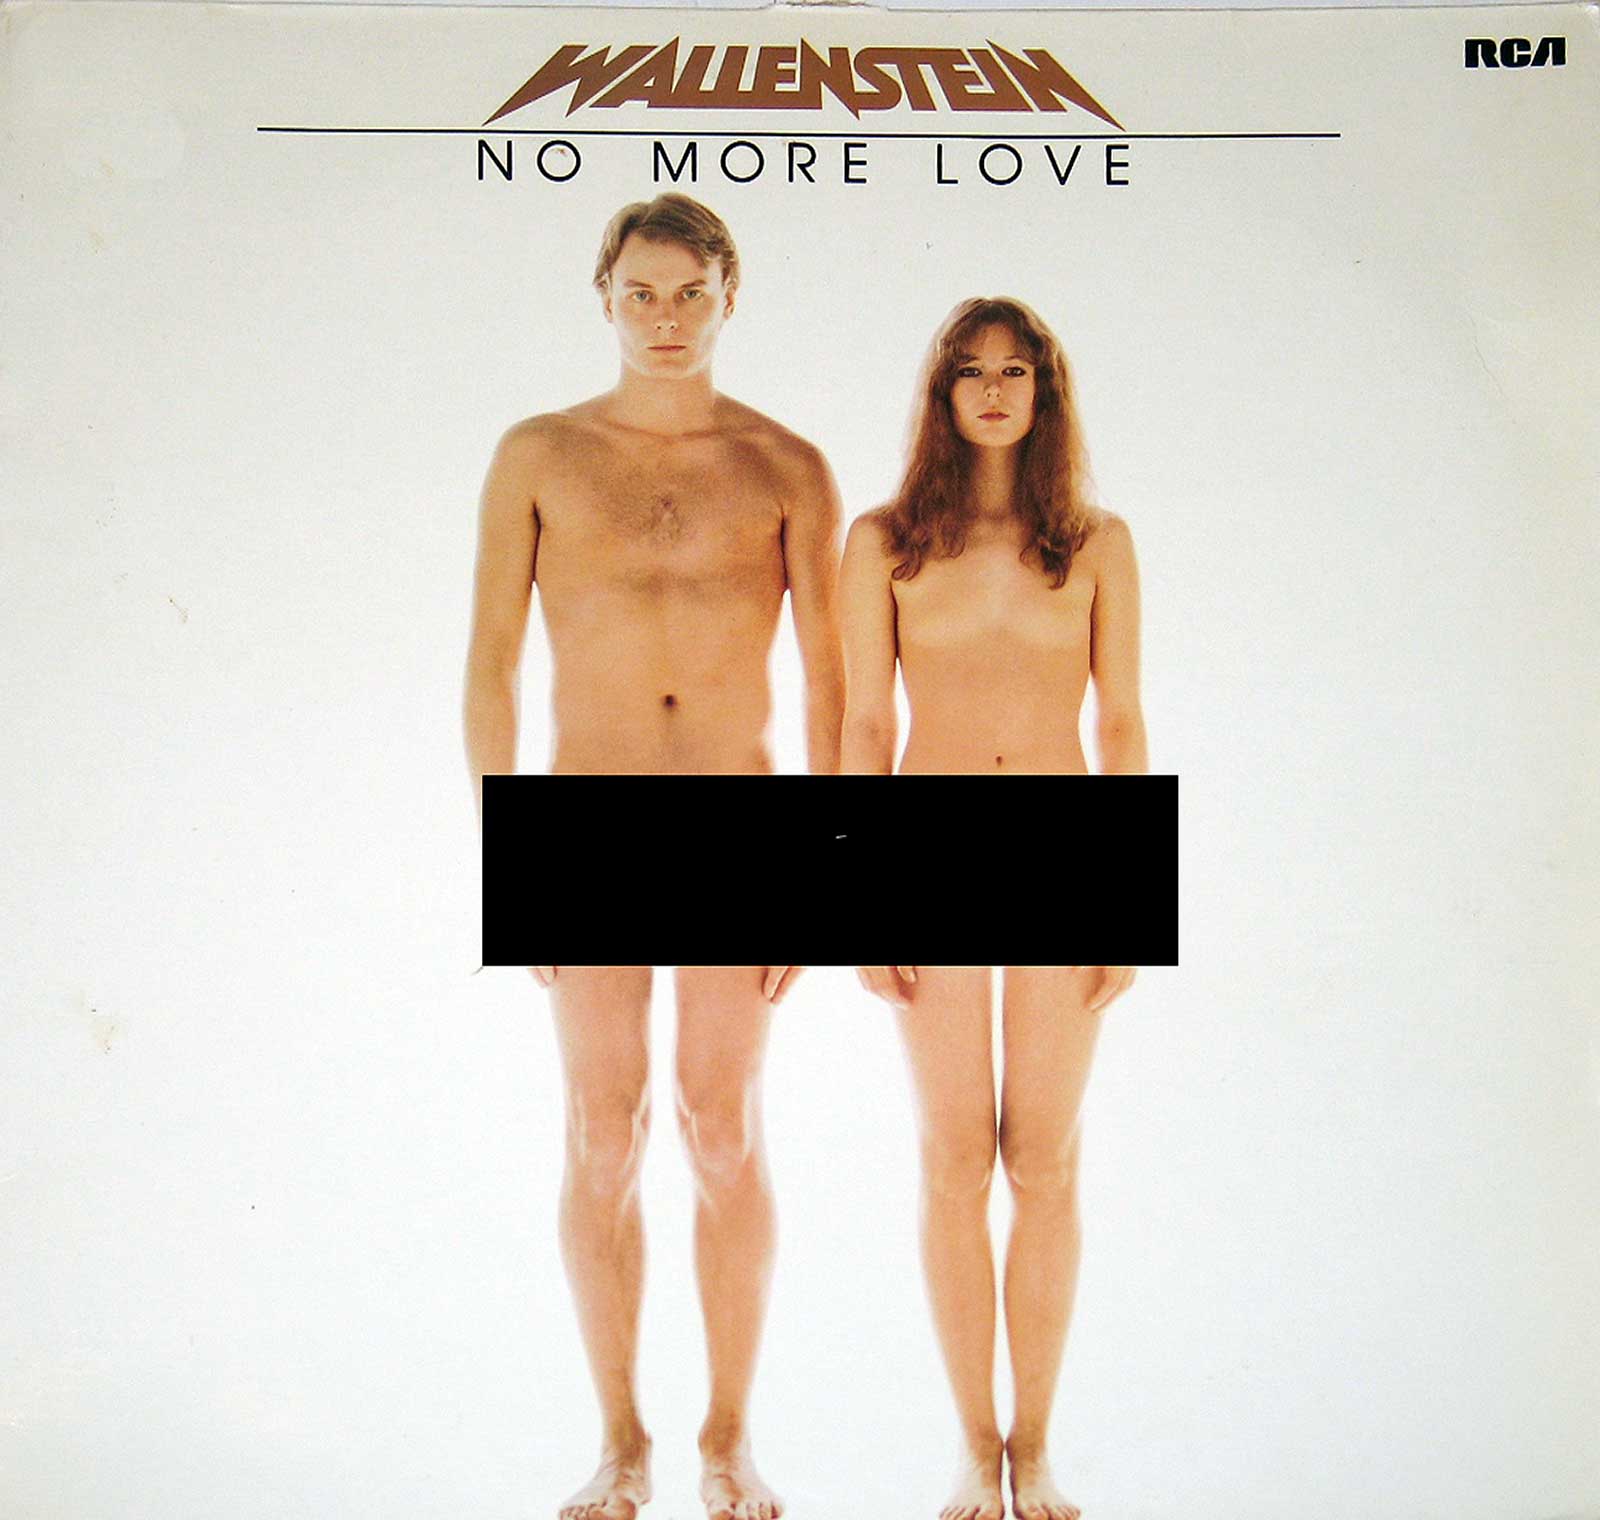 Album Front Cover of WALLENSTEIN NO MORE LOVE NUDITY 